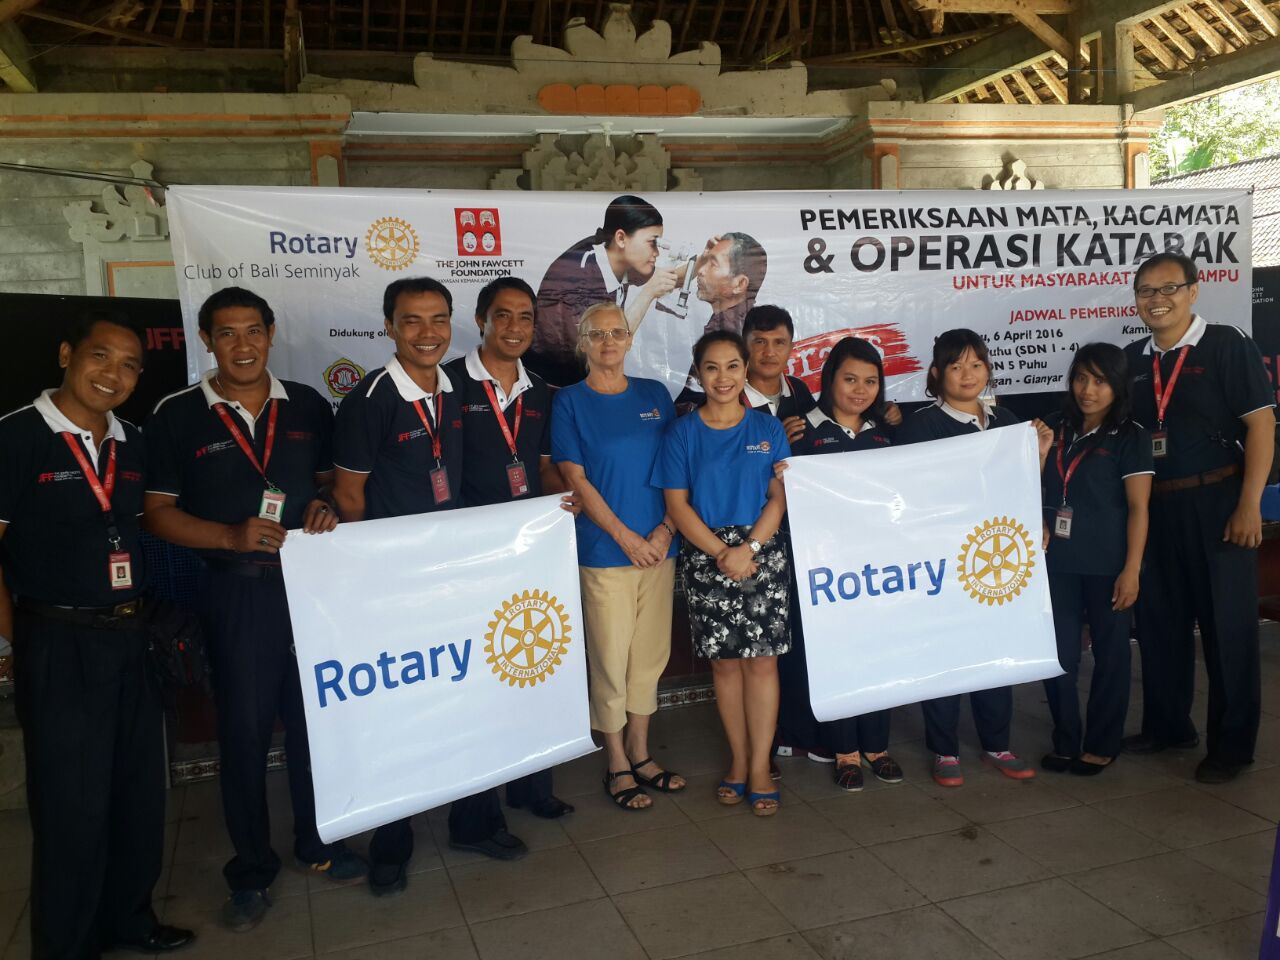 Rotary Bali